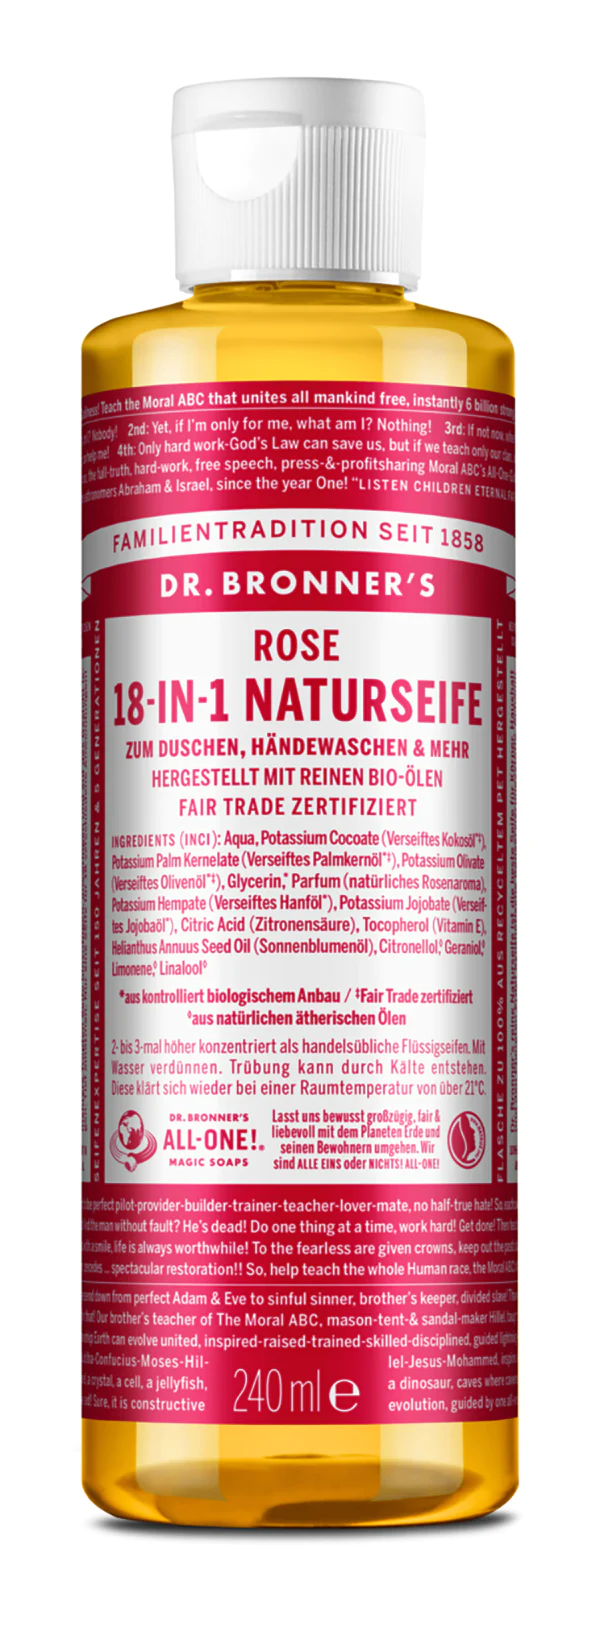 Dr Bronner 18-IN-1 NATURSEIFE Rose 240ml